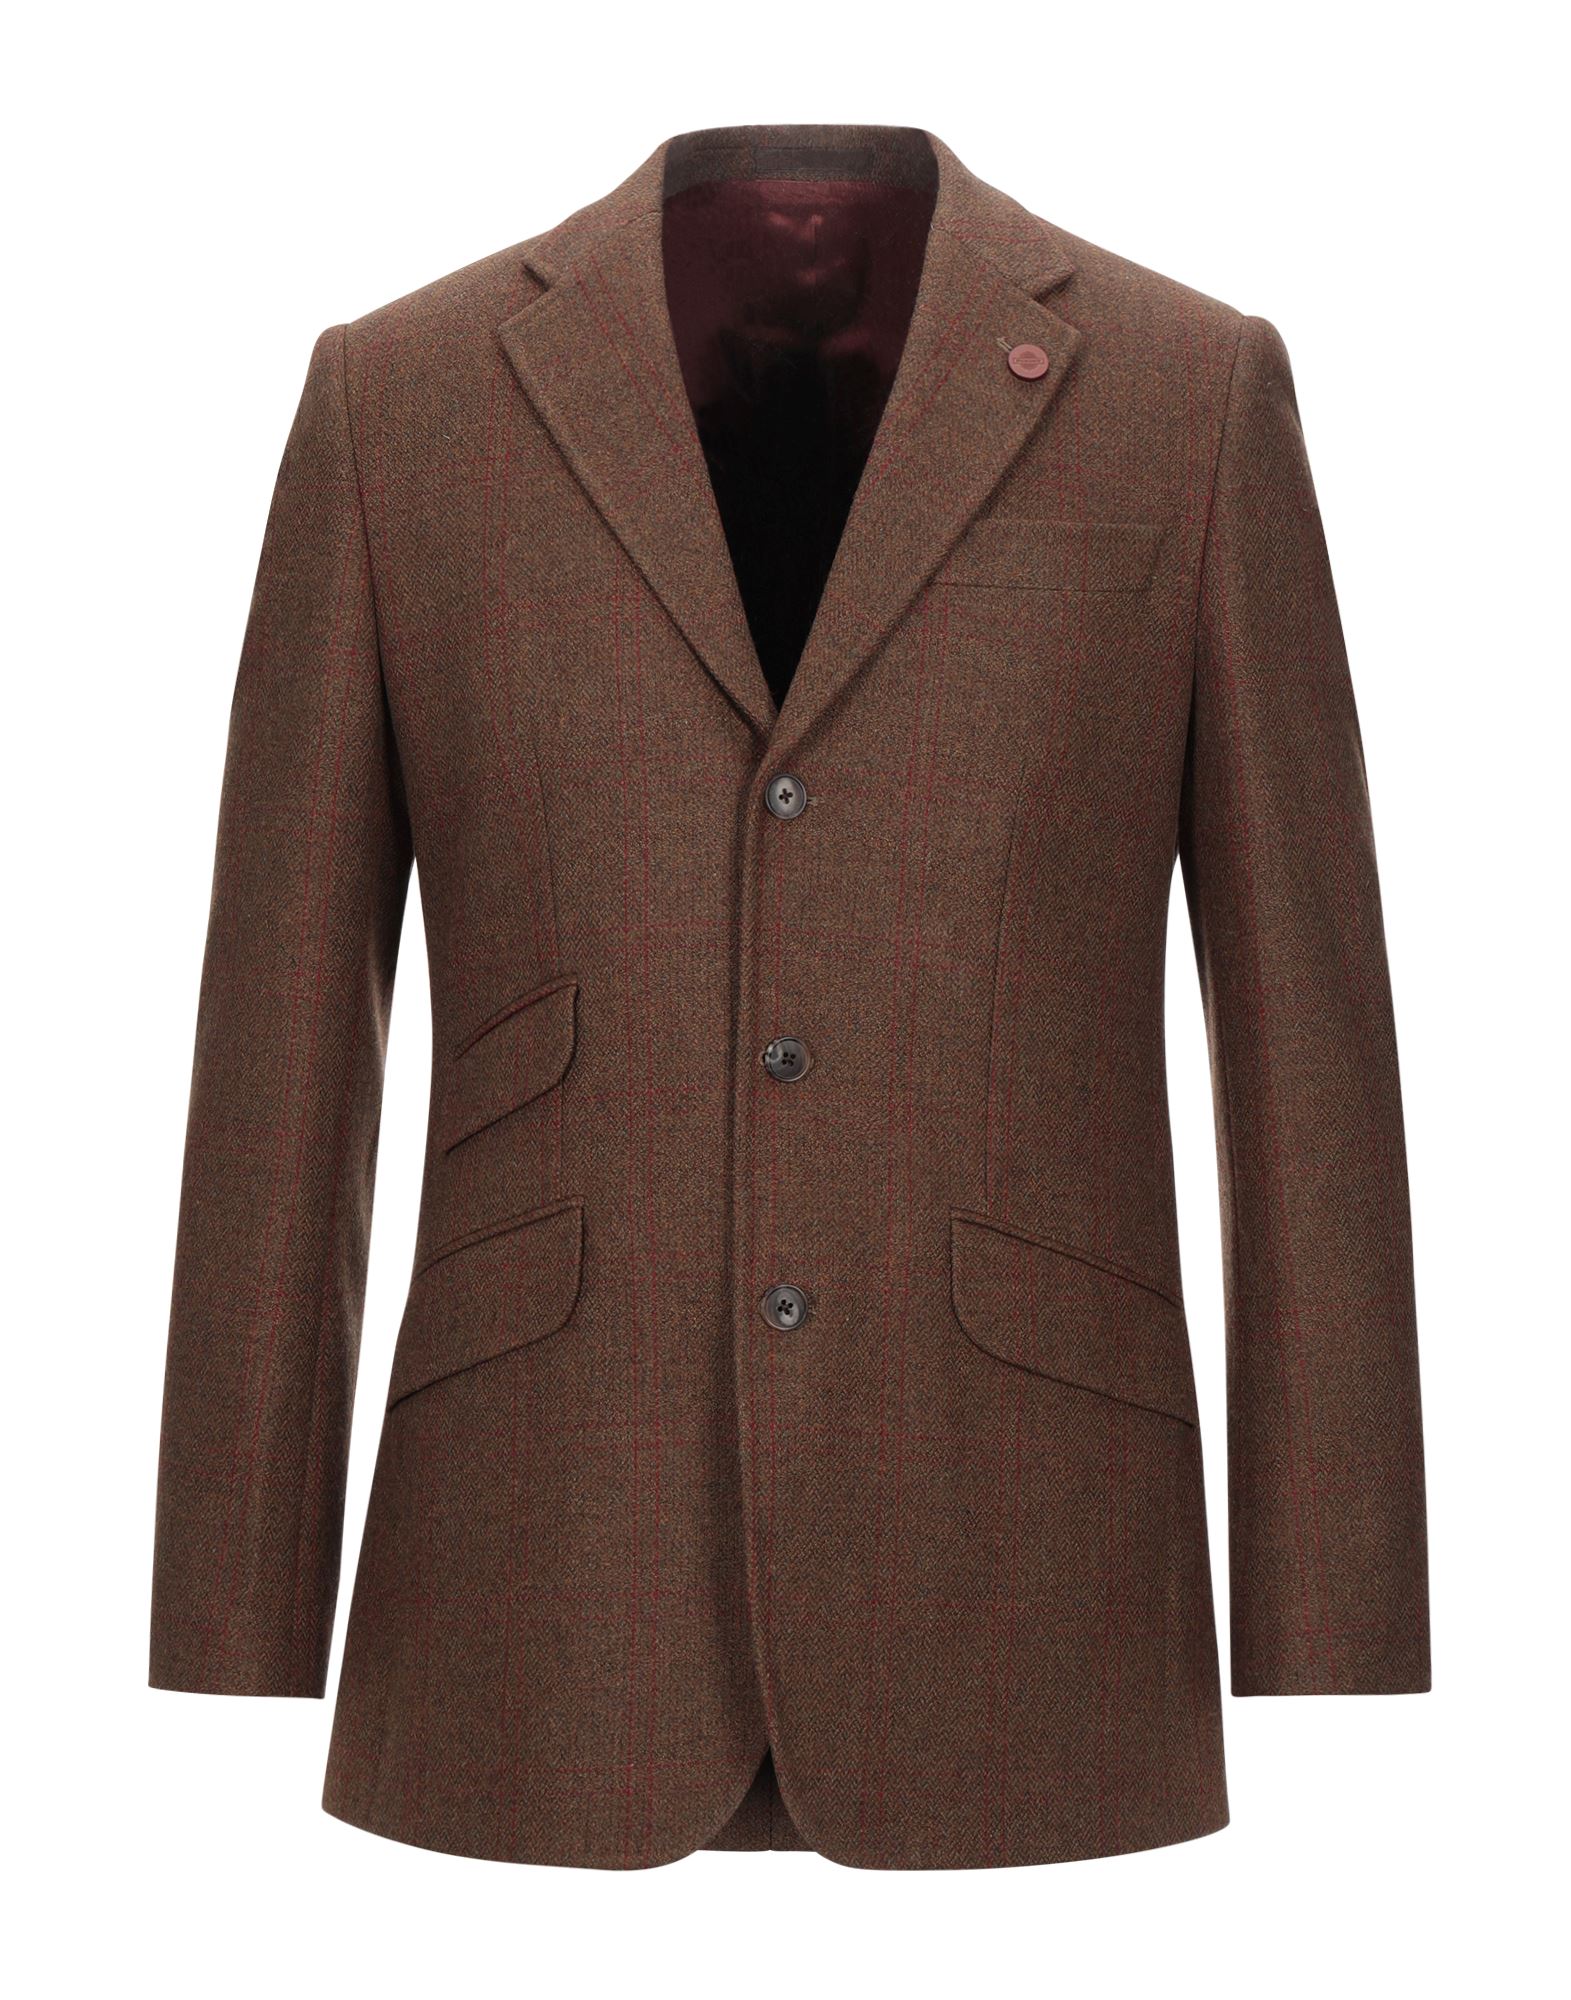 Purdey Suit Jackets In Brown